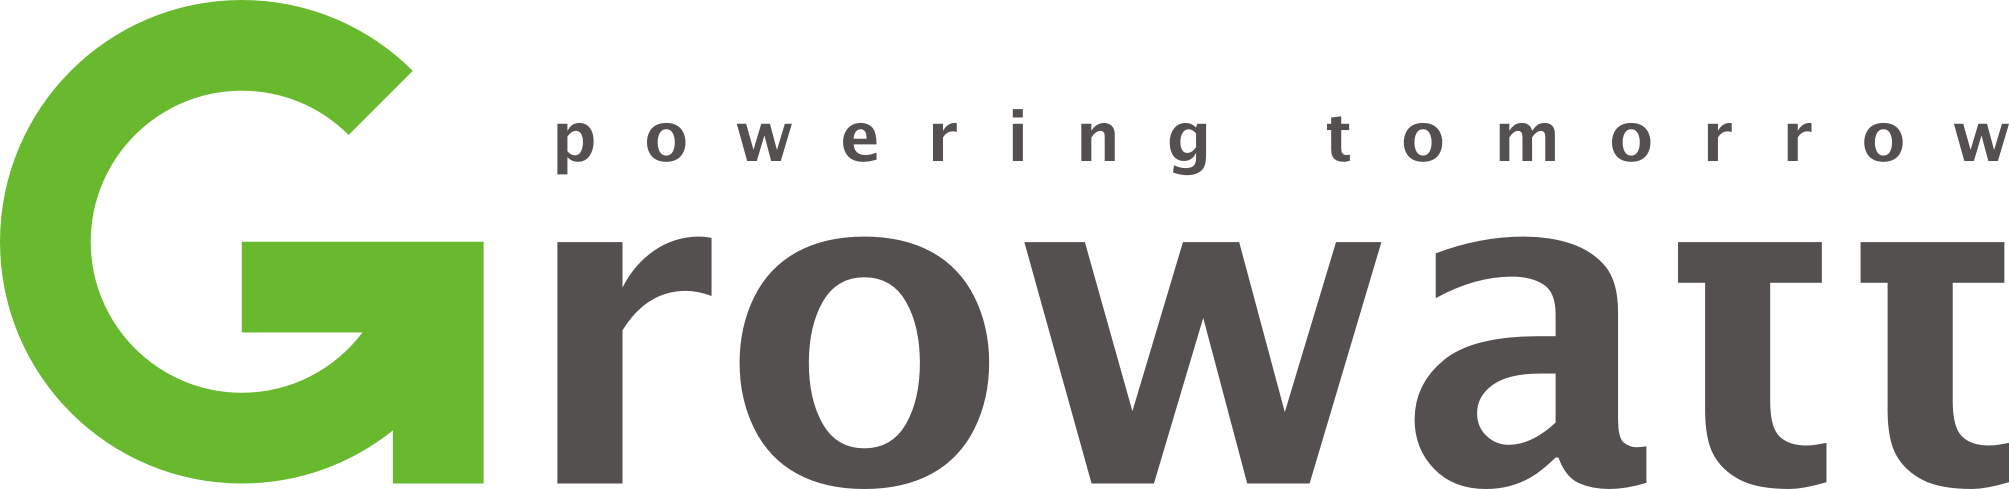 growatt logo.png